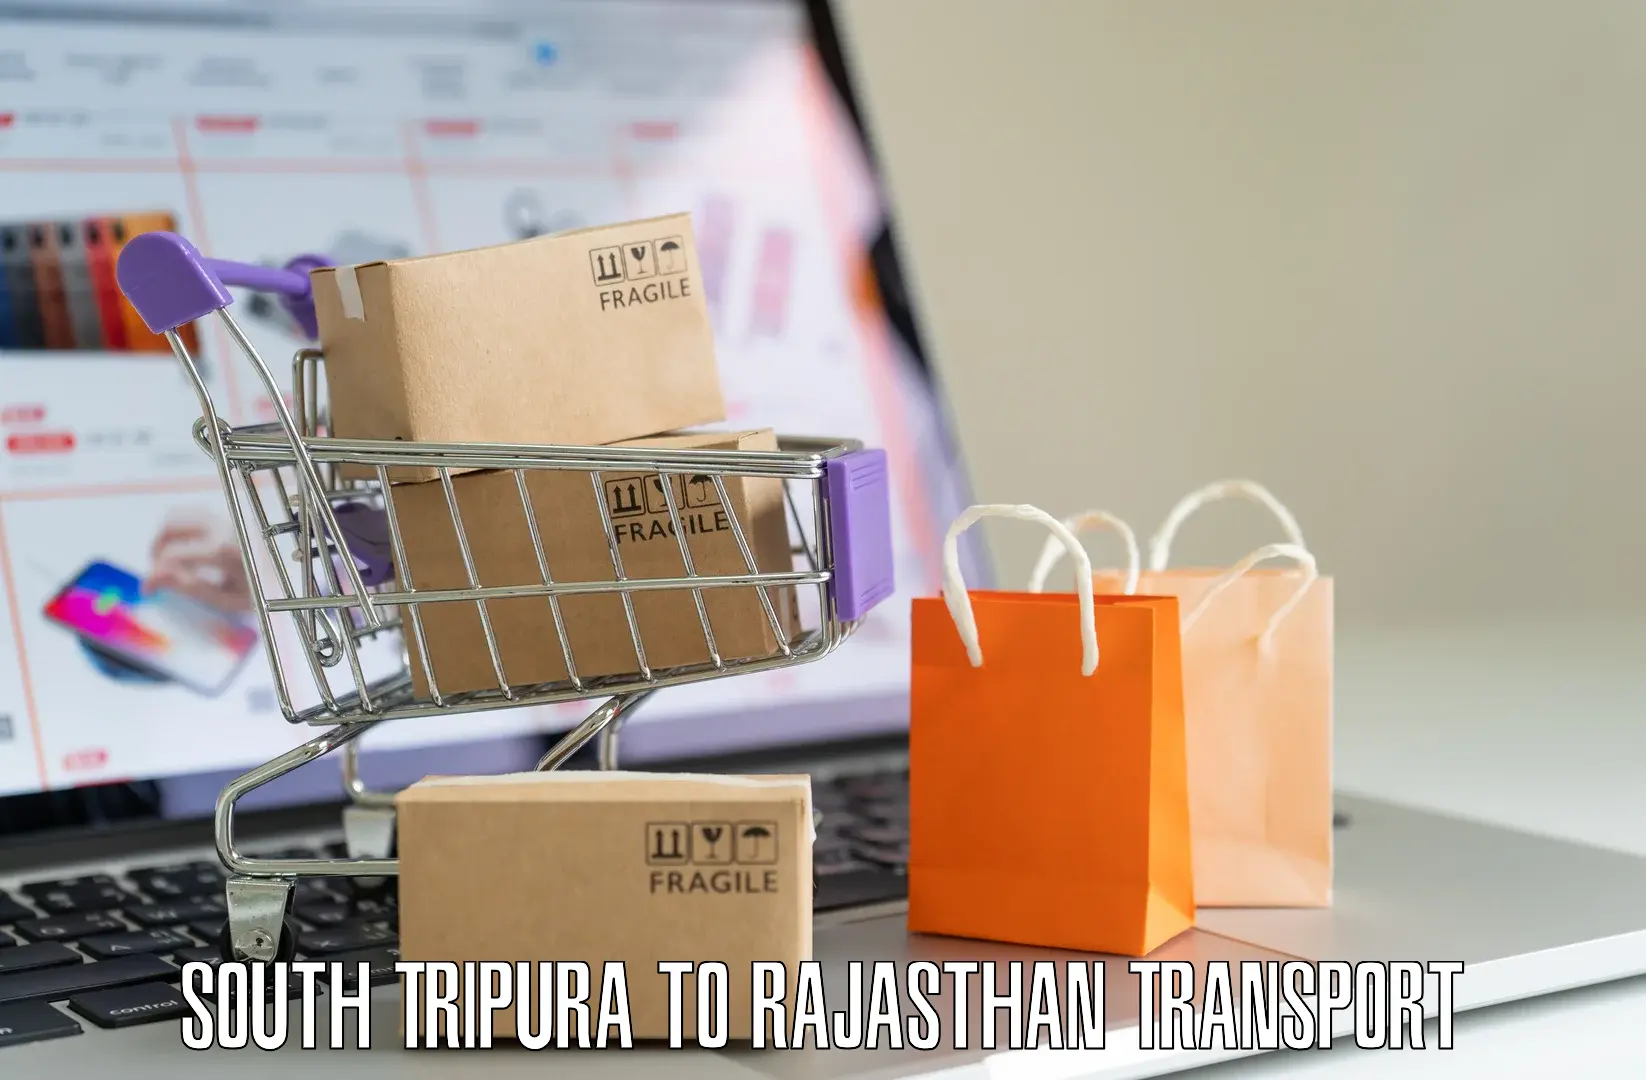 Online transport service South Tripura to Jaisalmer